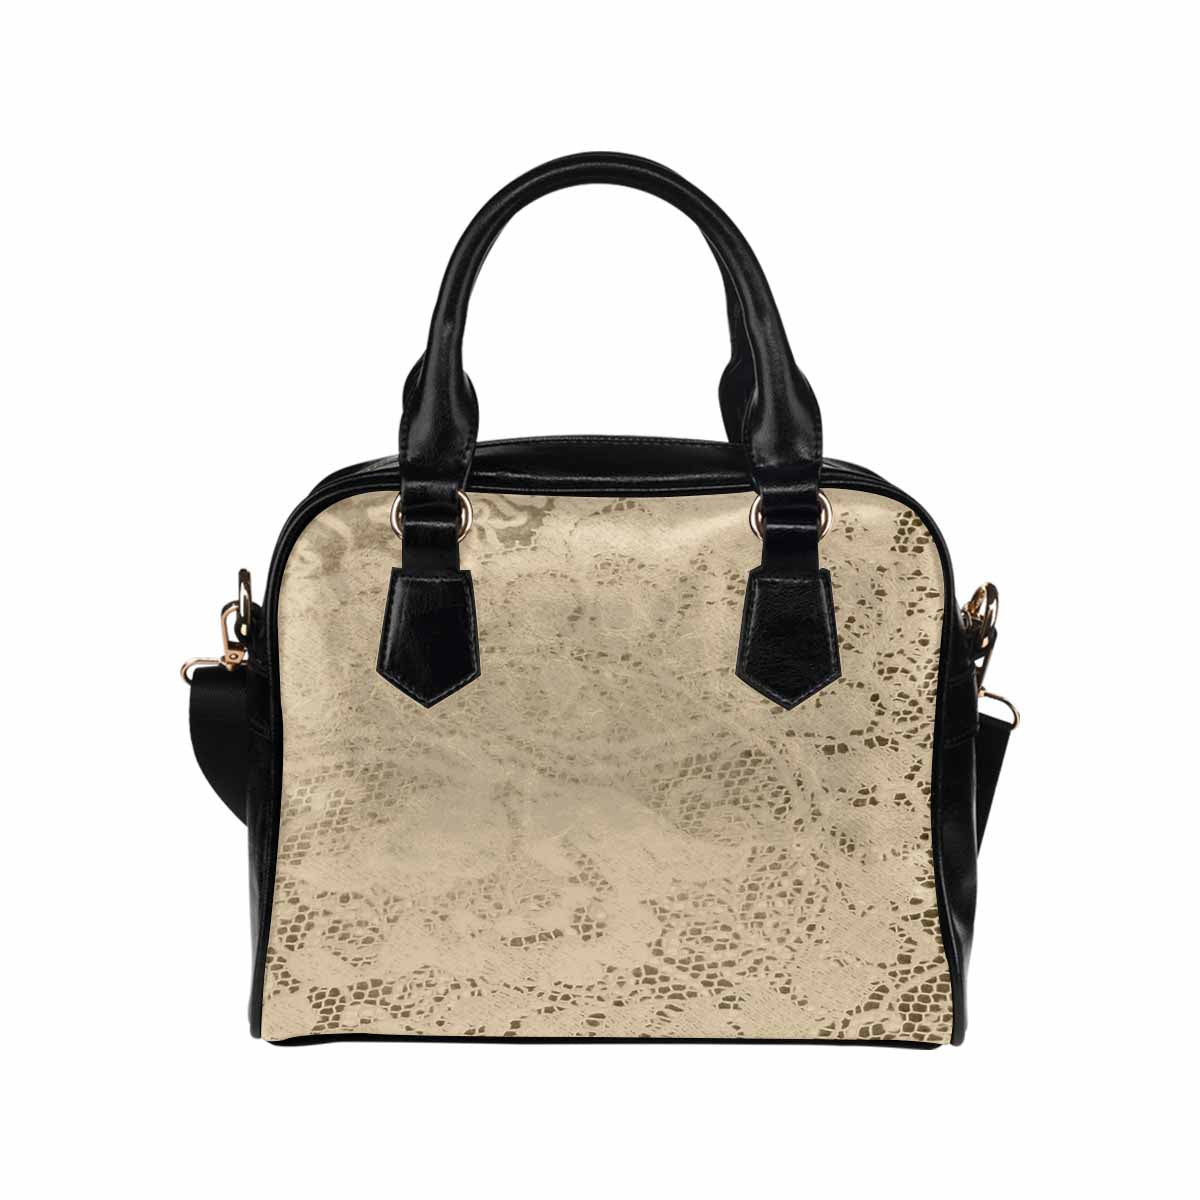 Victorian lace print, cute handbag, Mod 19163453, design 26